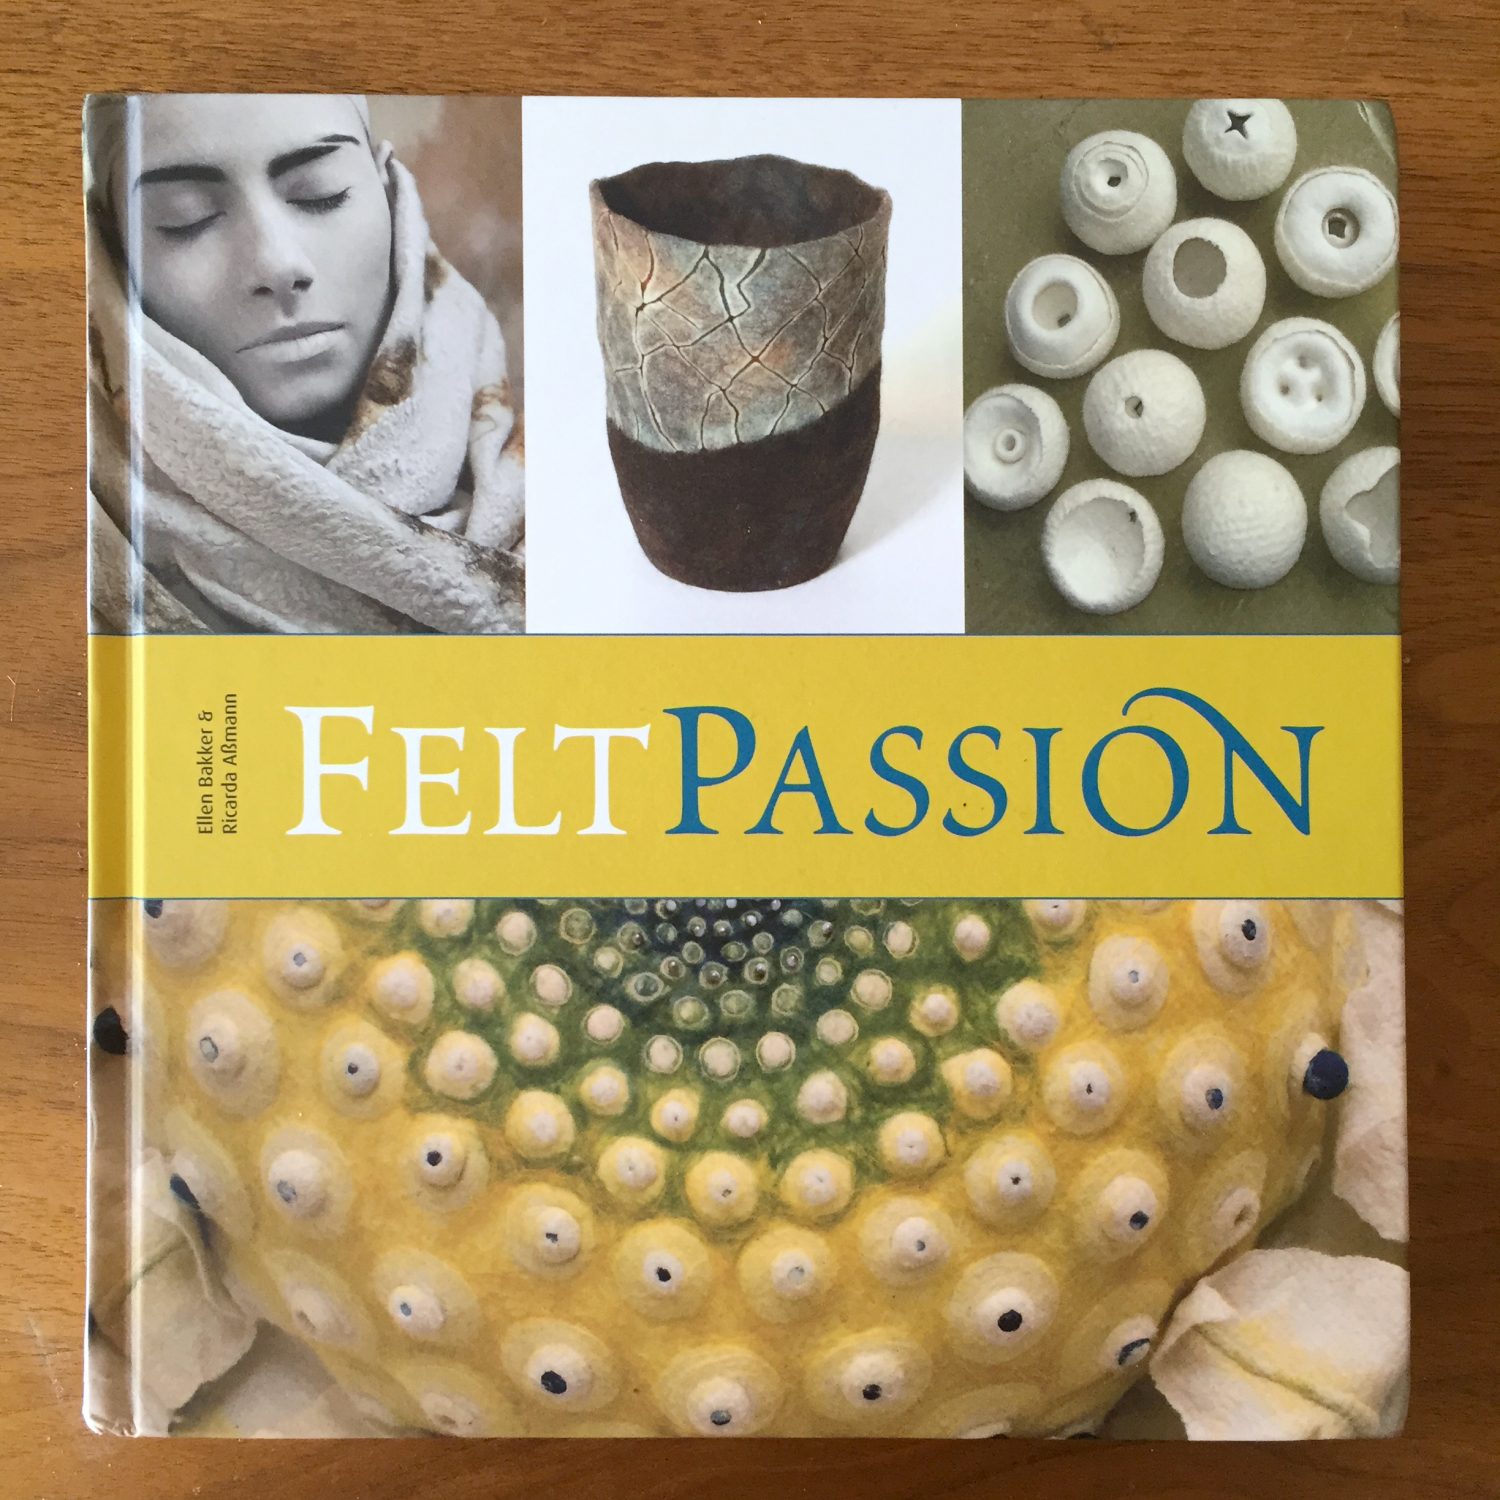 Book Review: Felt Passion